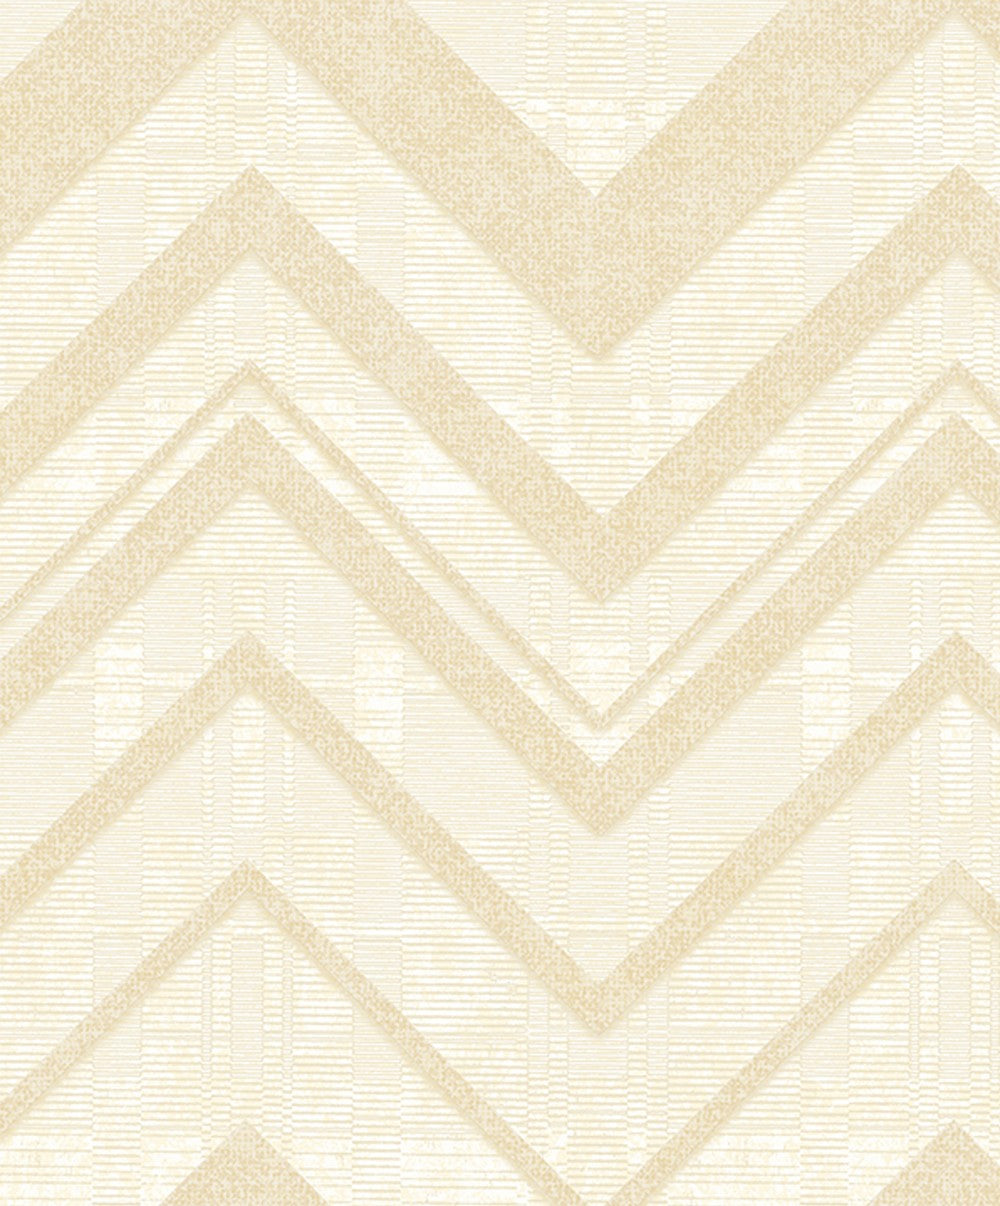 Zigzag Wave Pattern Off White Geometric Wallpaper.